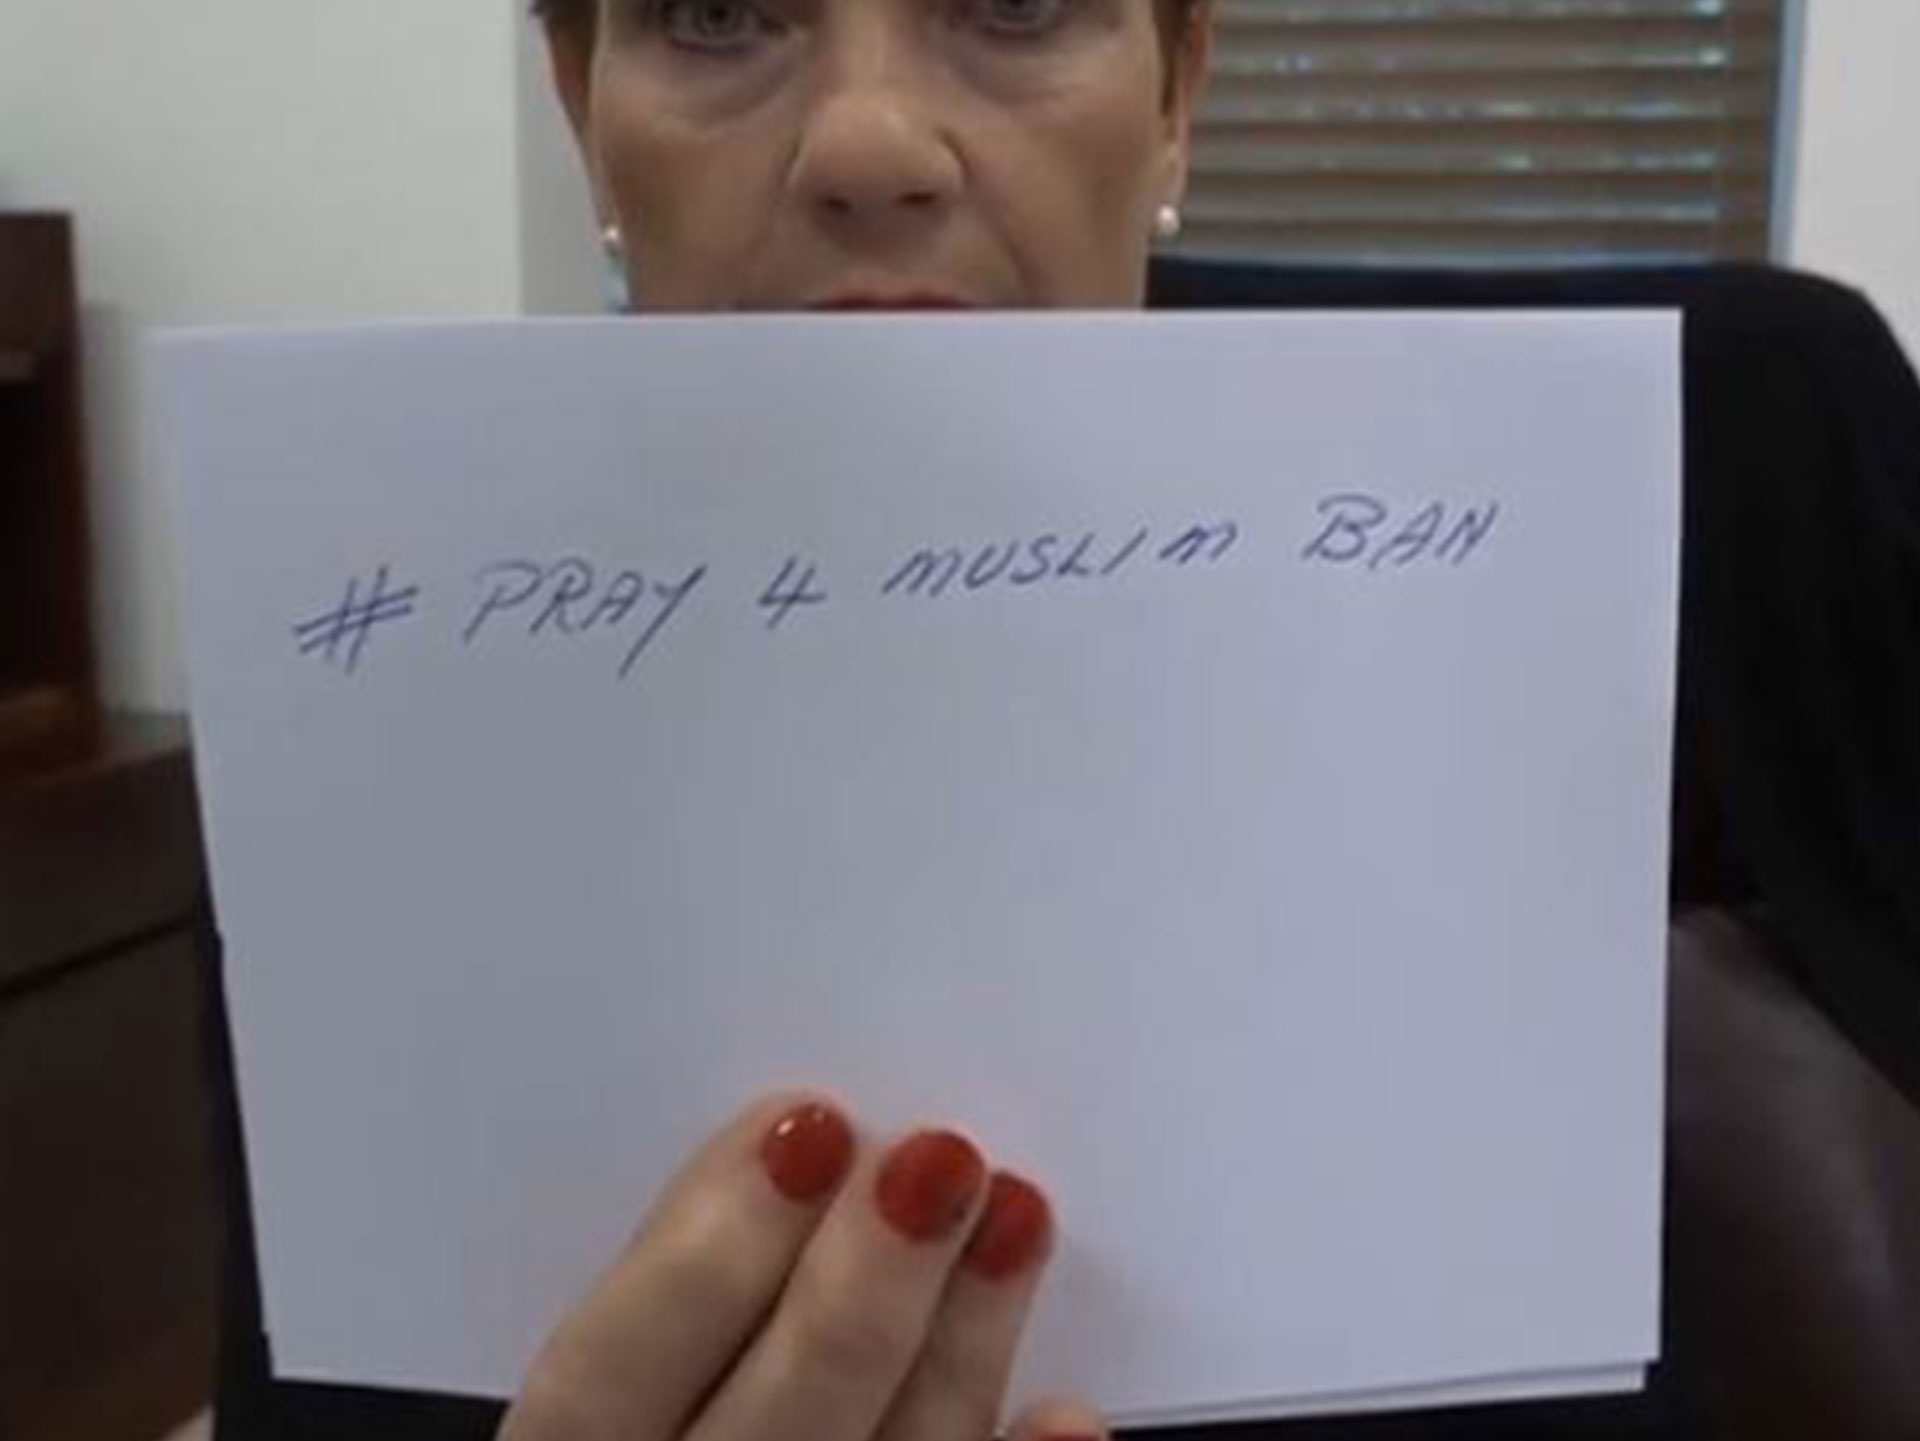 Pauline Hanson wants to ban the Muslim faith